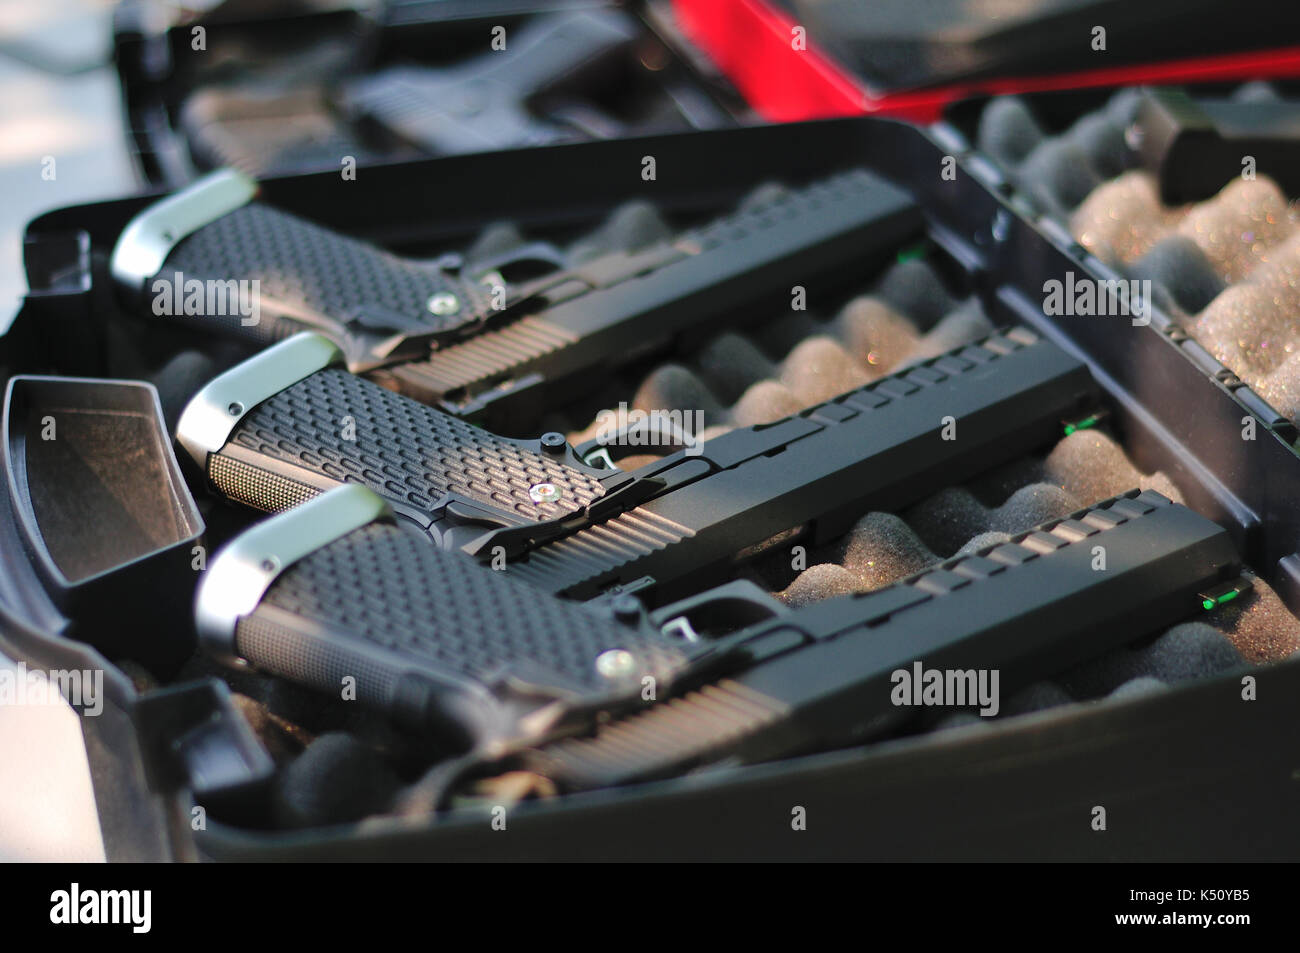 Airsoft guns laid out in gun case. Stock Photo